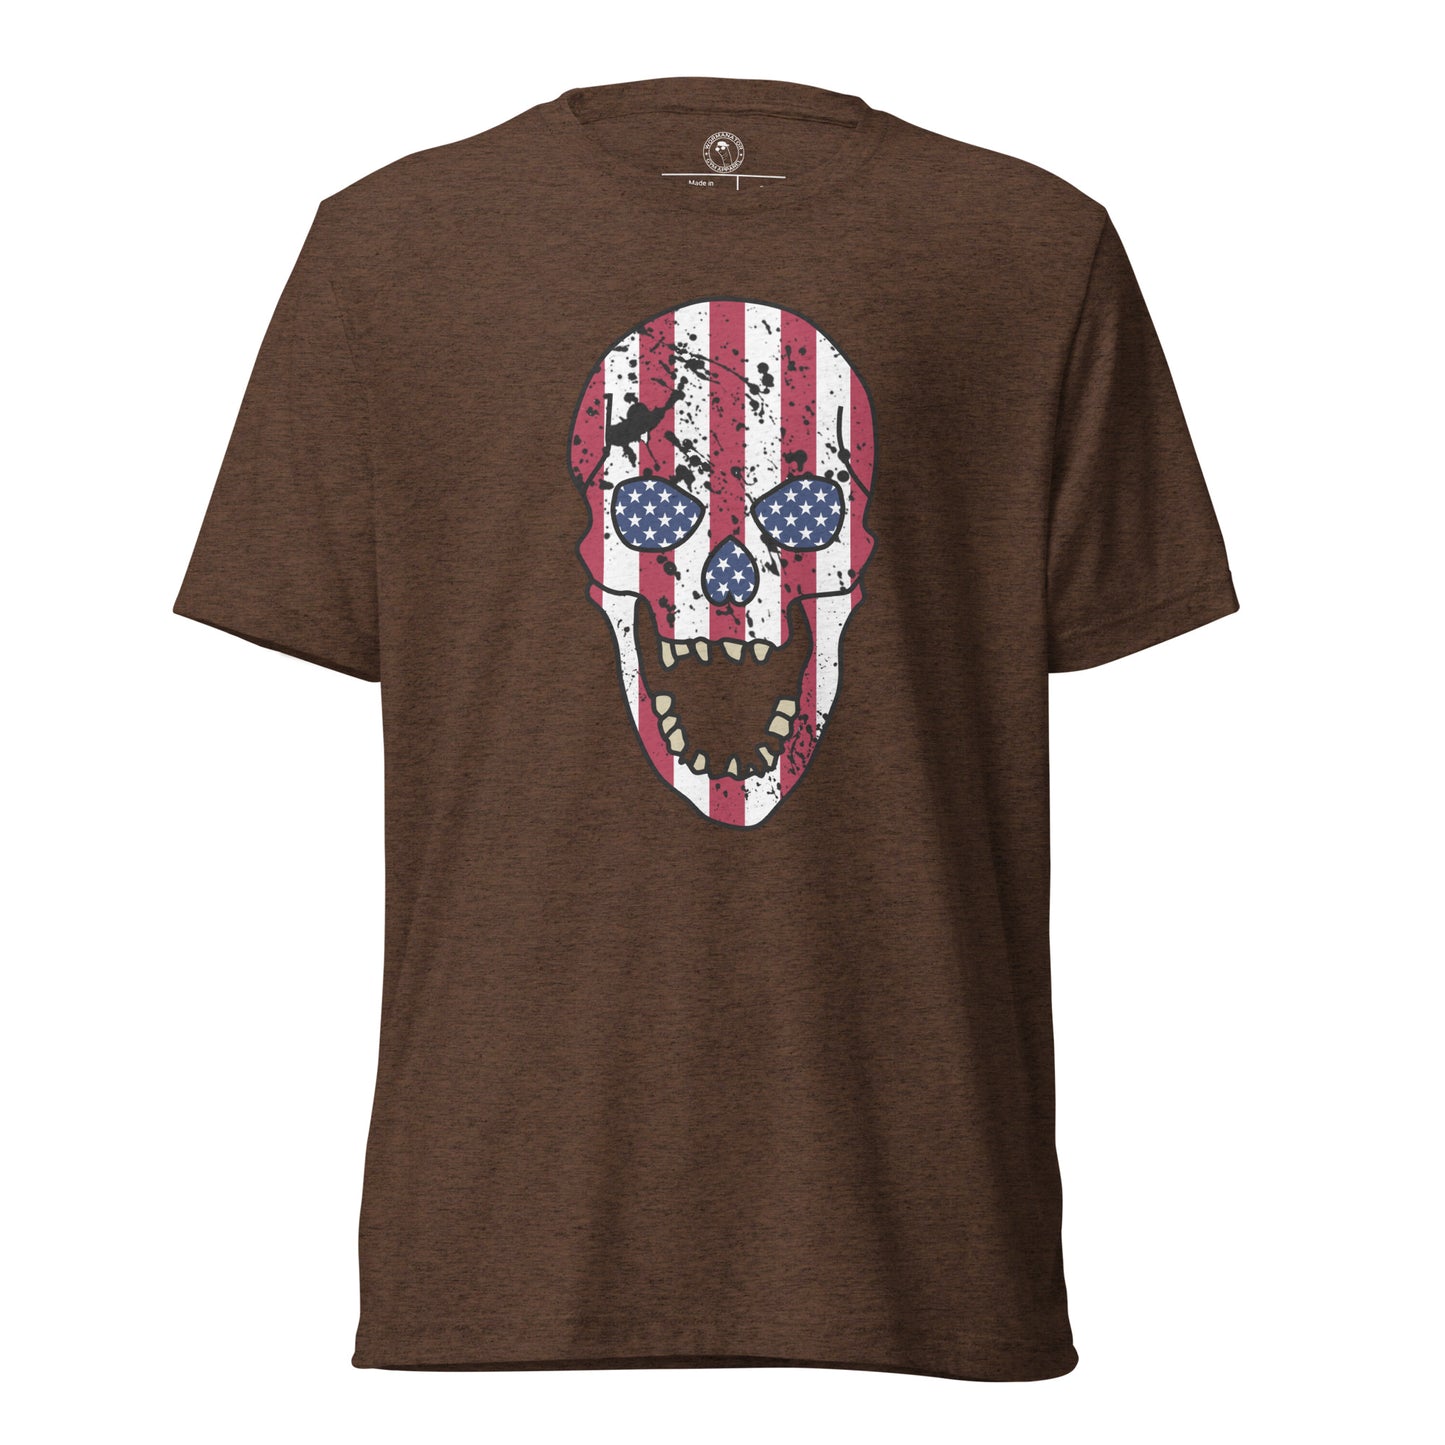 USA Skull Shirt - American Flag Punisher - Brown Triblend